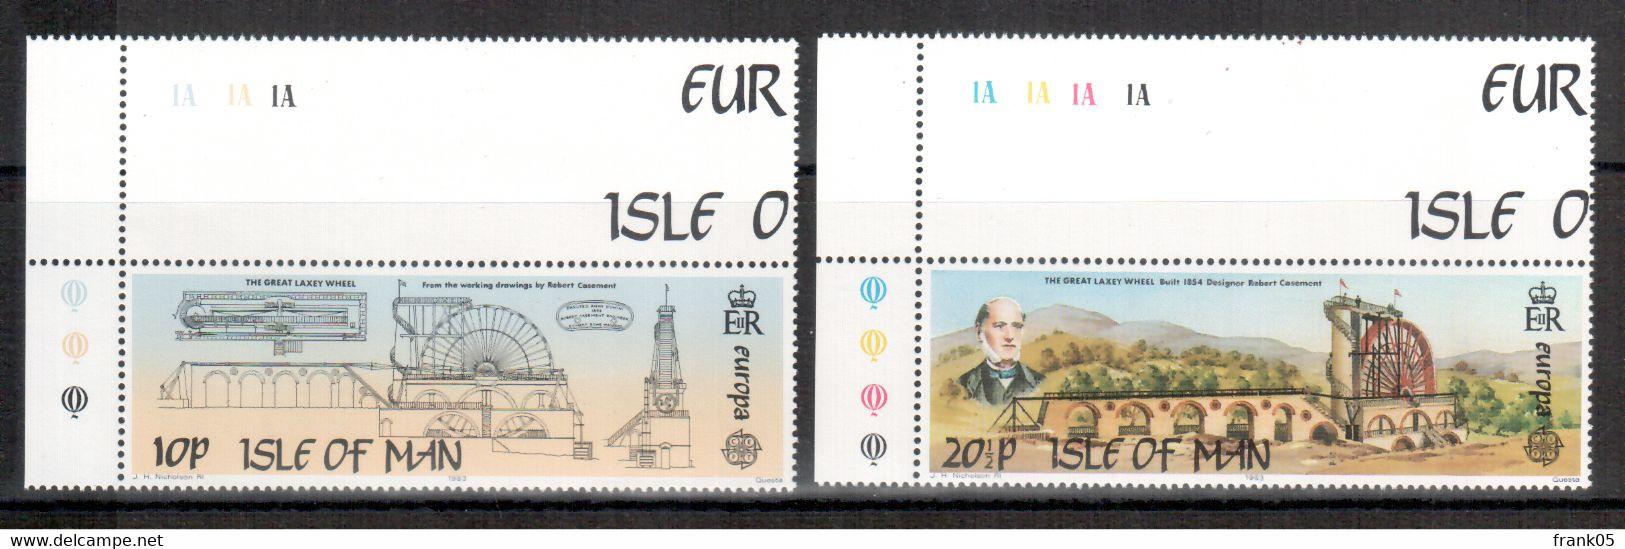 Insel Man / Isle Of Man / Ile De Man 1983 Satz/set EUROPA ** - 1983